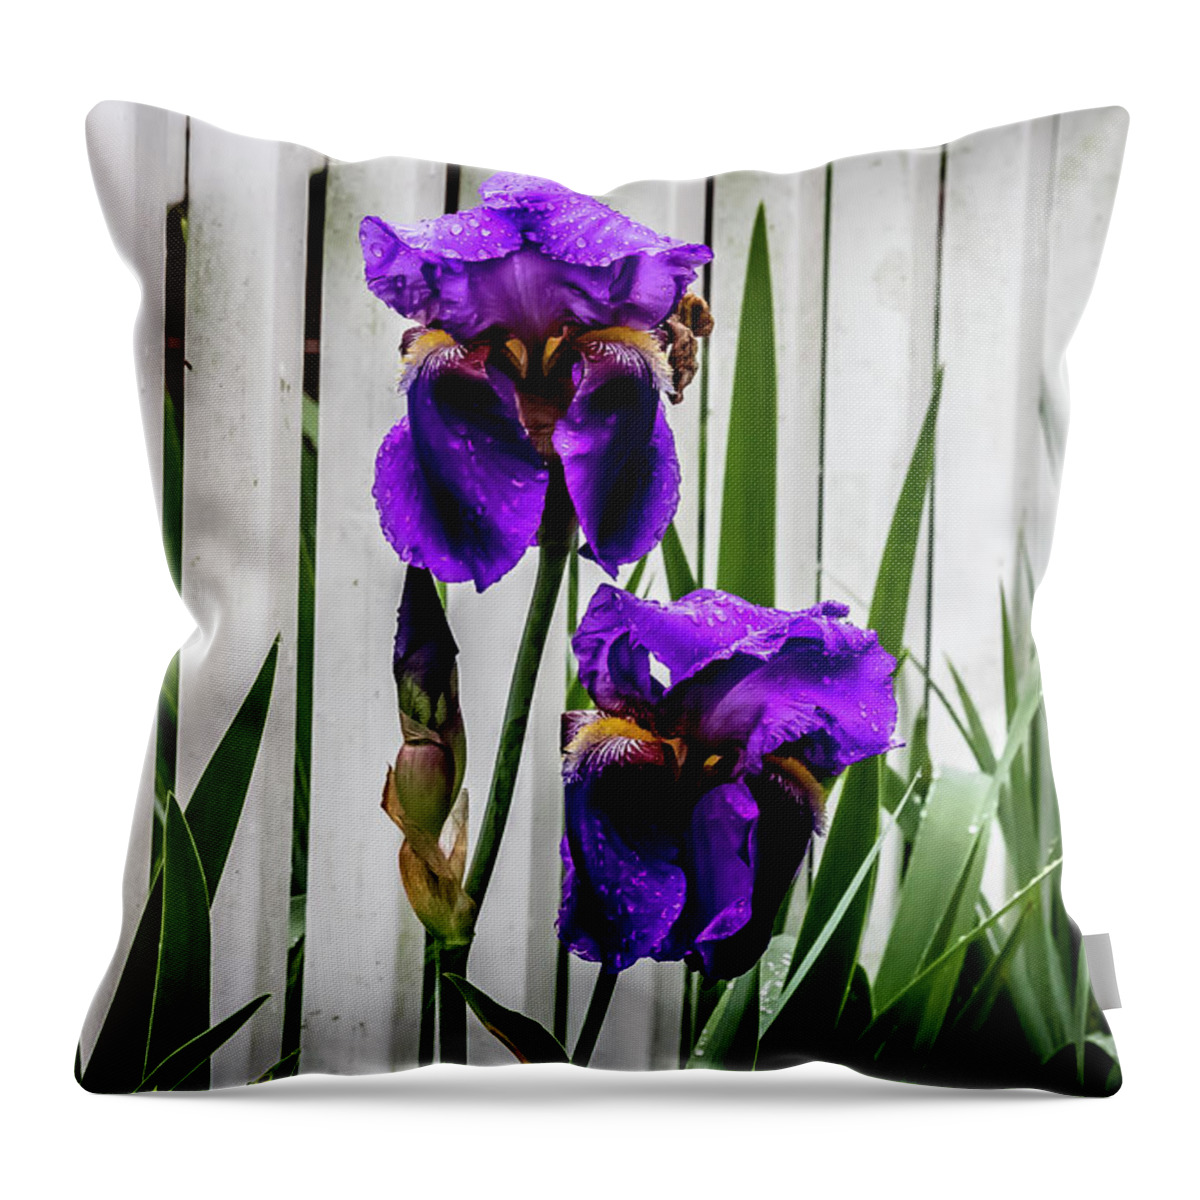 Iris Throw Pillow featuring the digital art Giant Purple Iris by Ed Stines